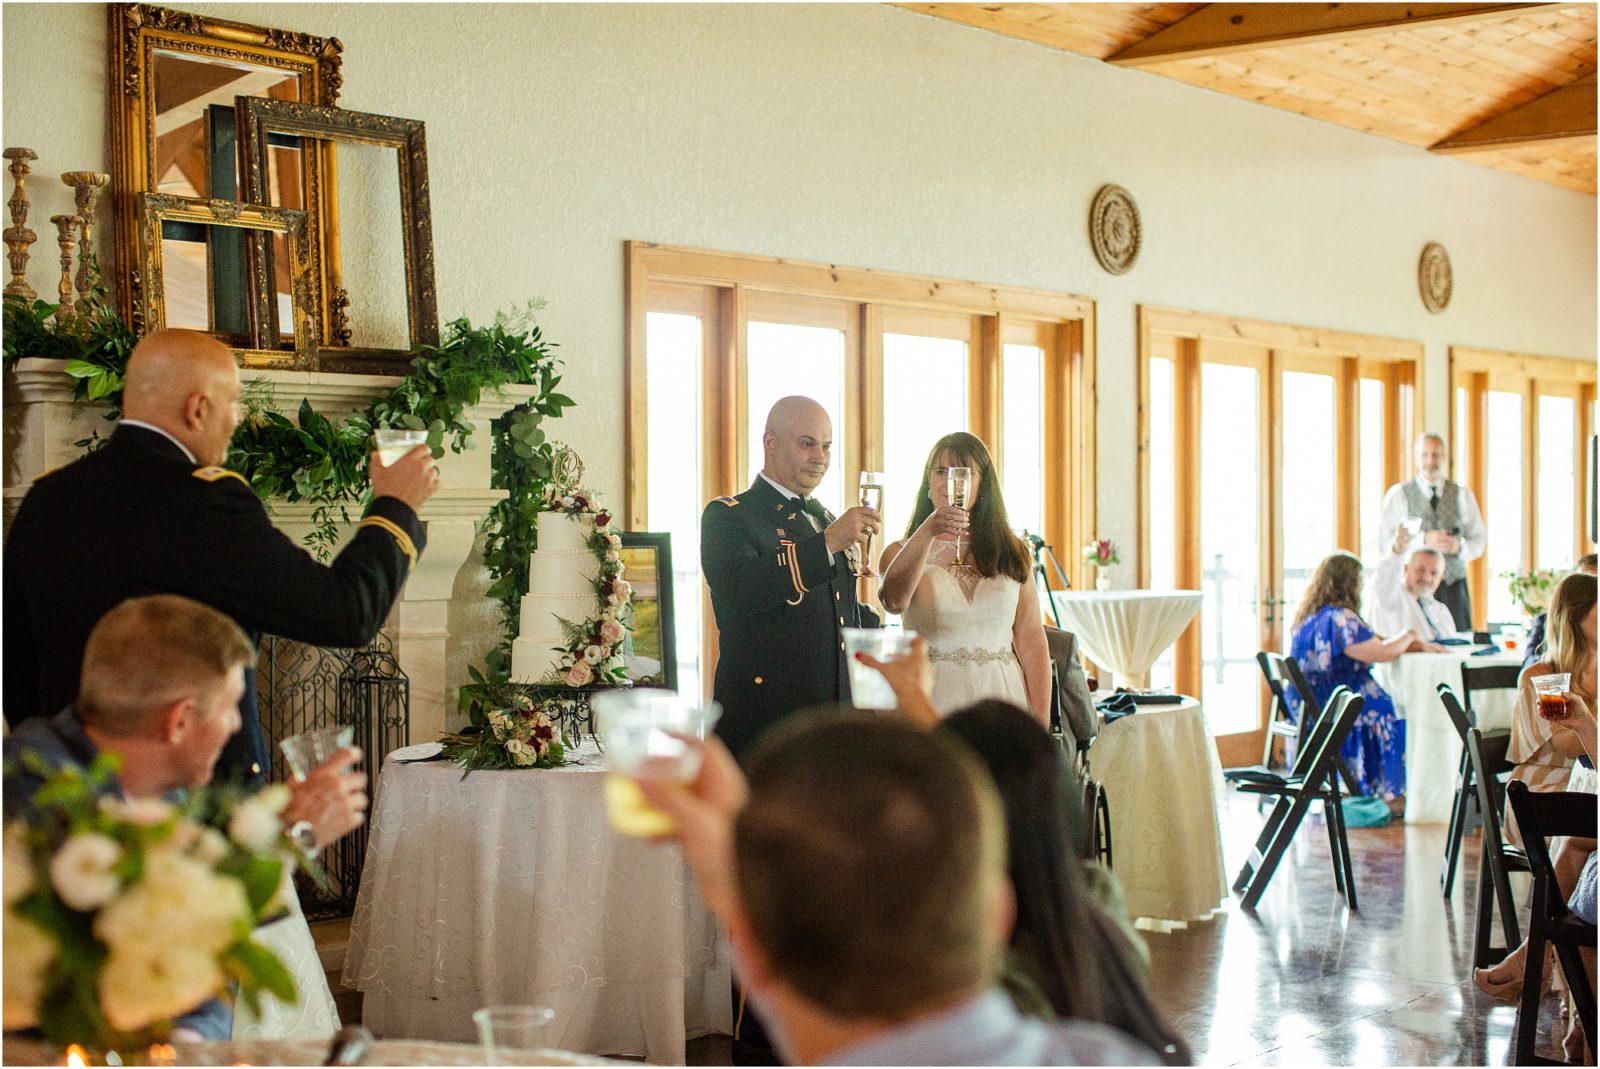 Couple toasting at wedding